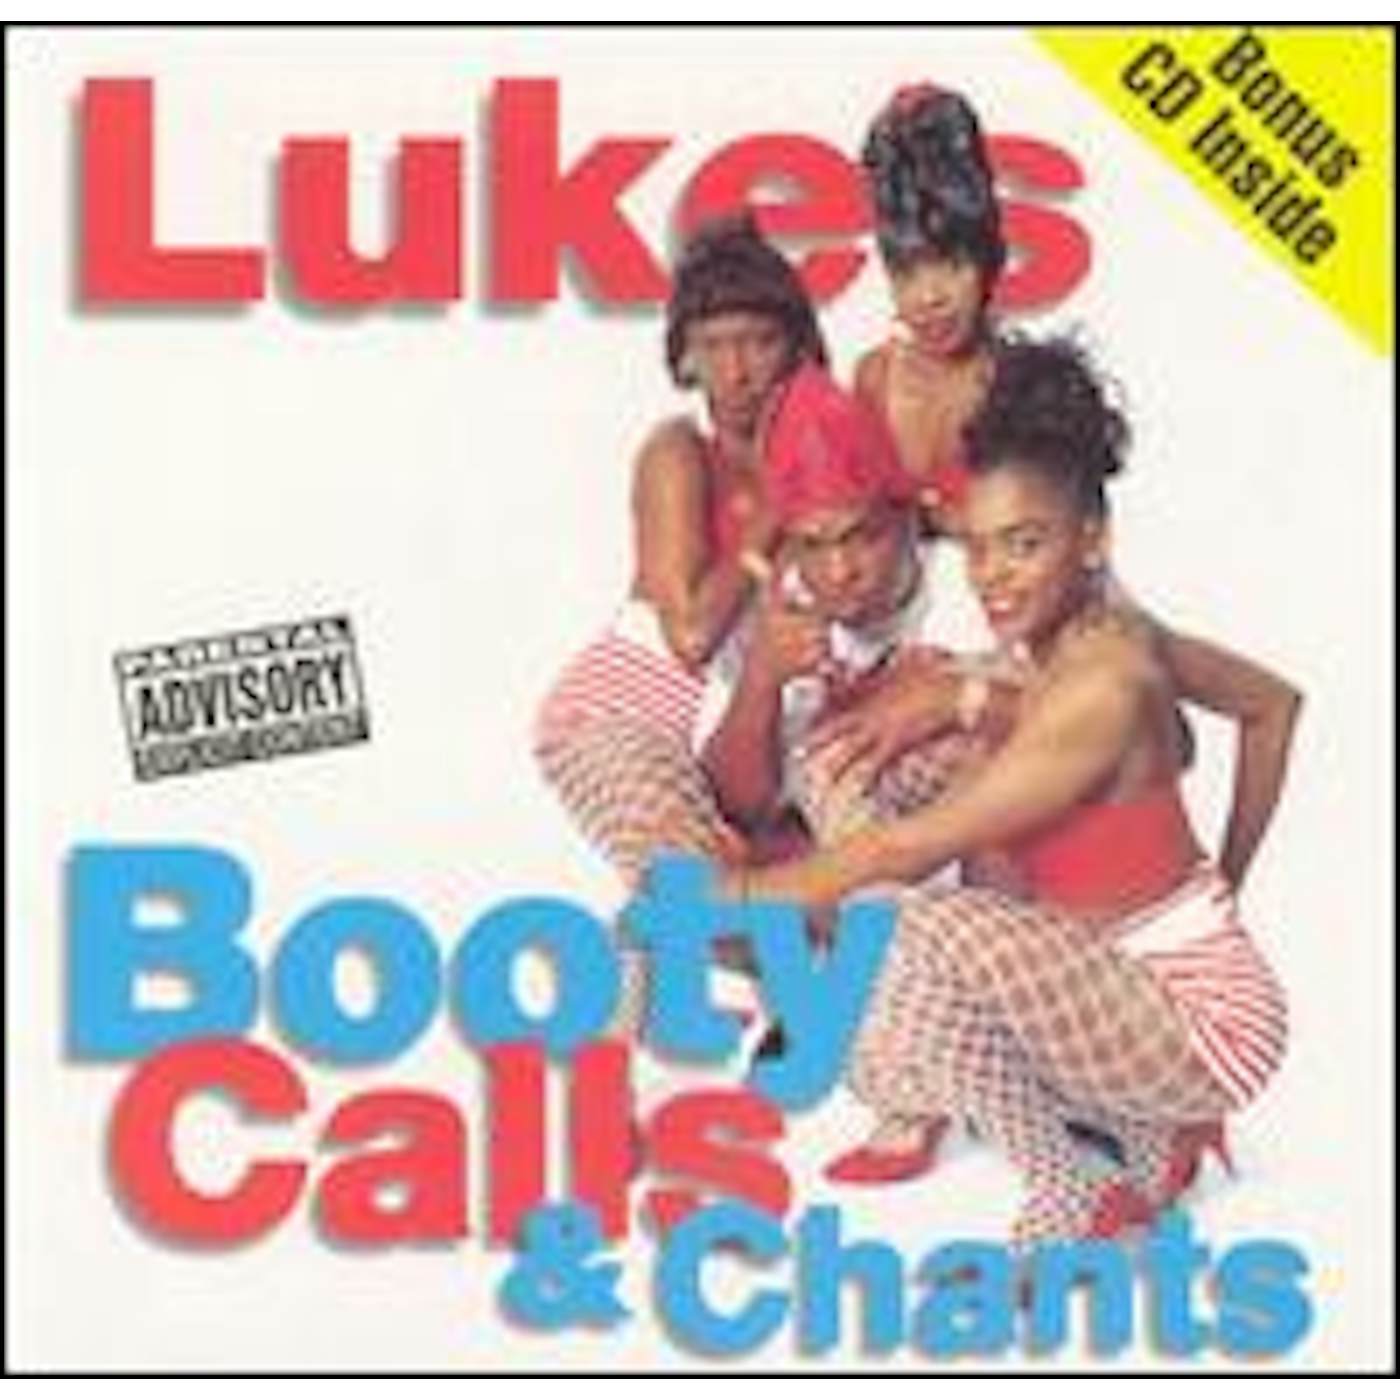 LUKE'S BOOTY CALLS & CHANTS CD